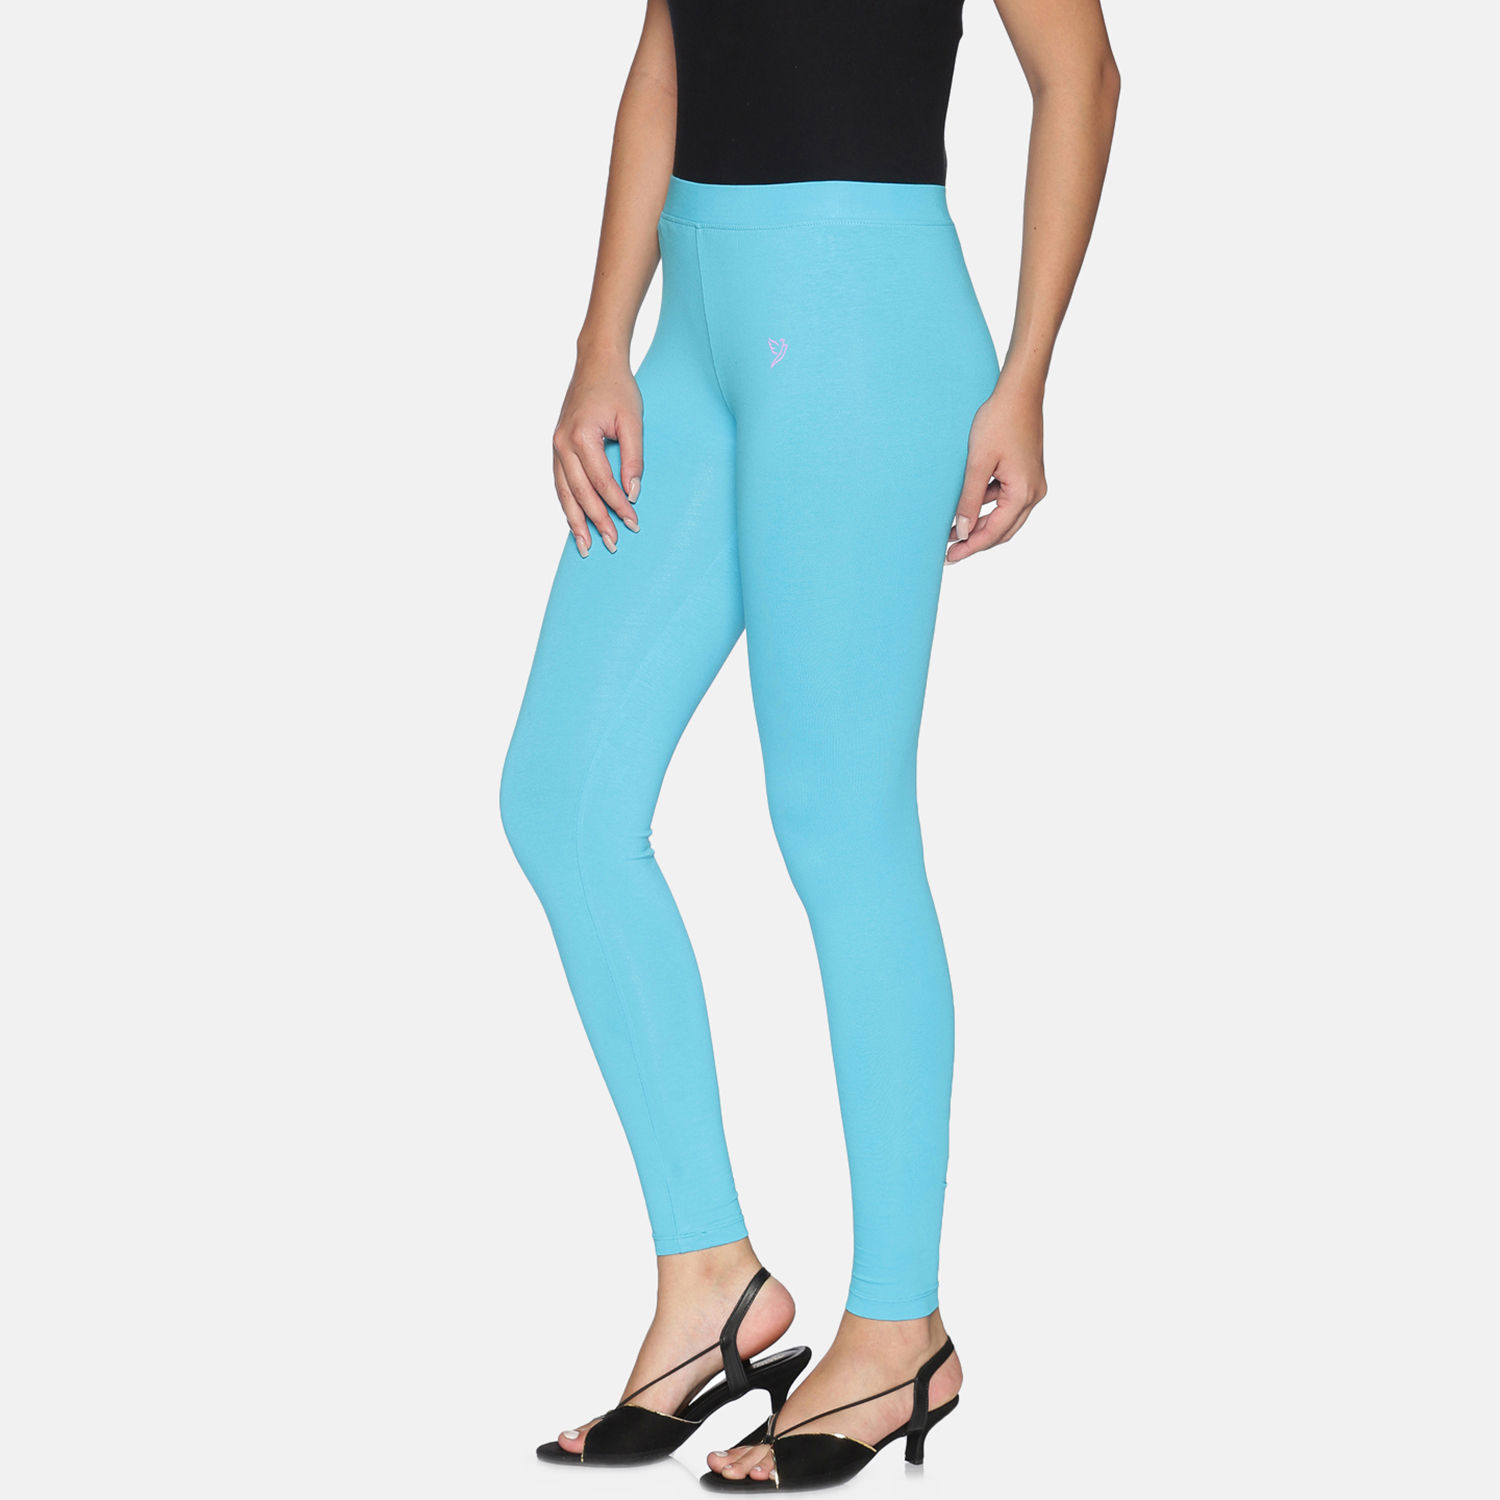 Twin Birds Women Premium Ankle Legging - Radiant Series - Premium Viscose  Cotton - Snug fit Comfortable Active Wear (Small) at Amazon Women's  Clothing store